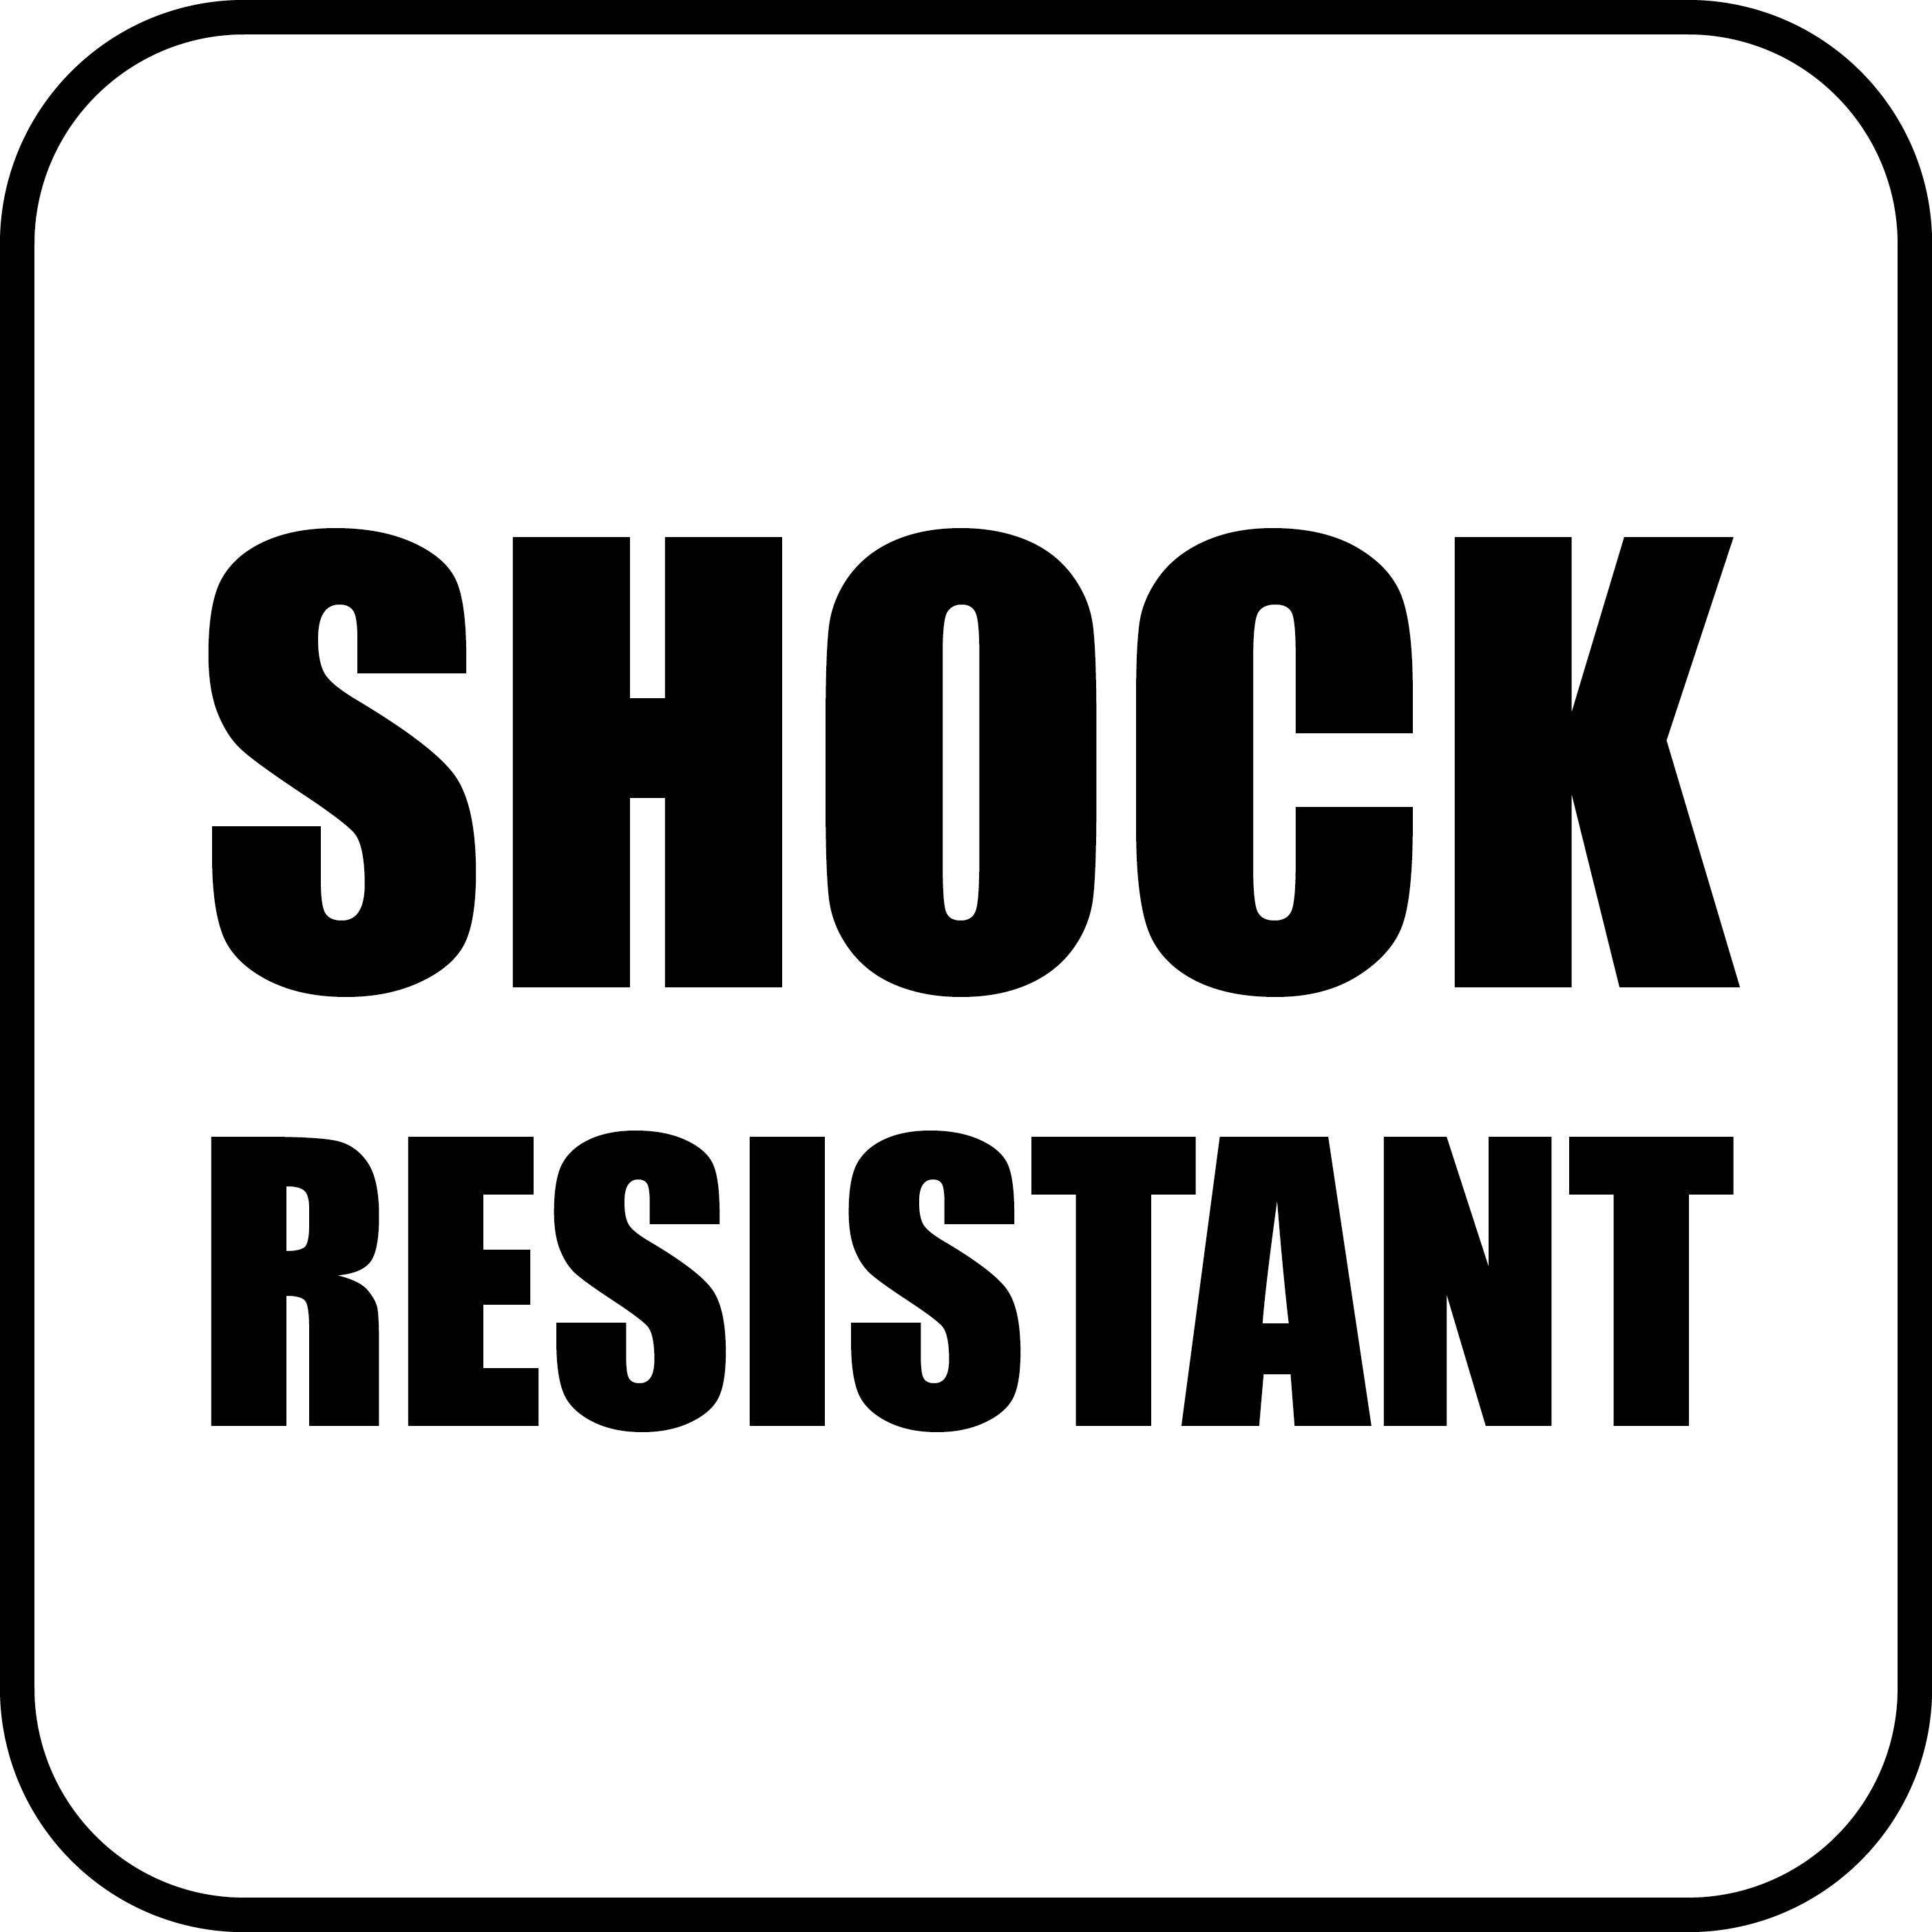 Shock resistant